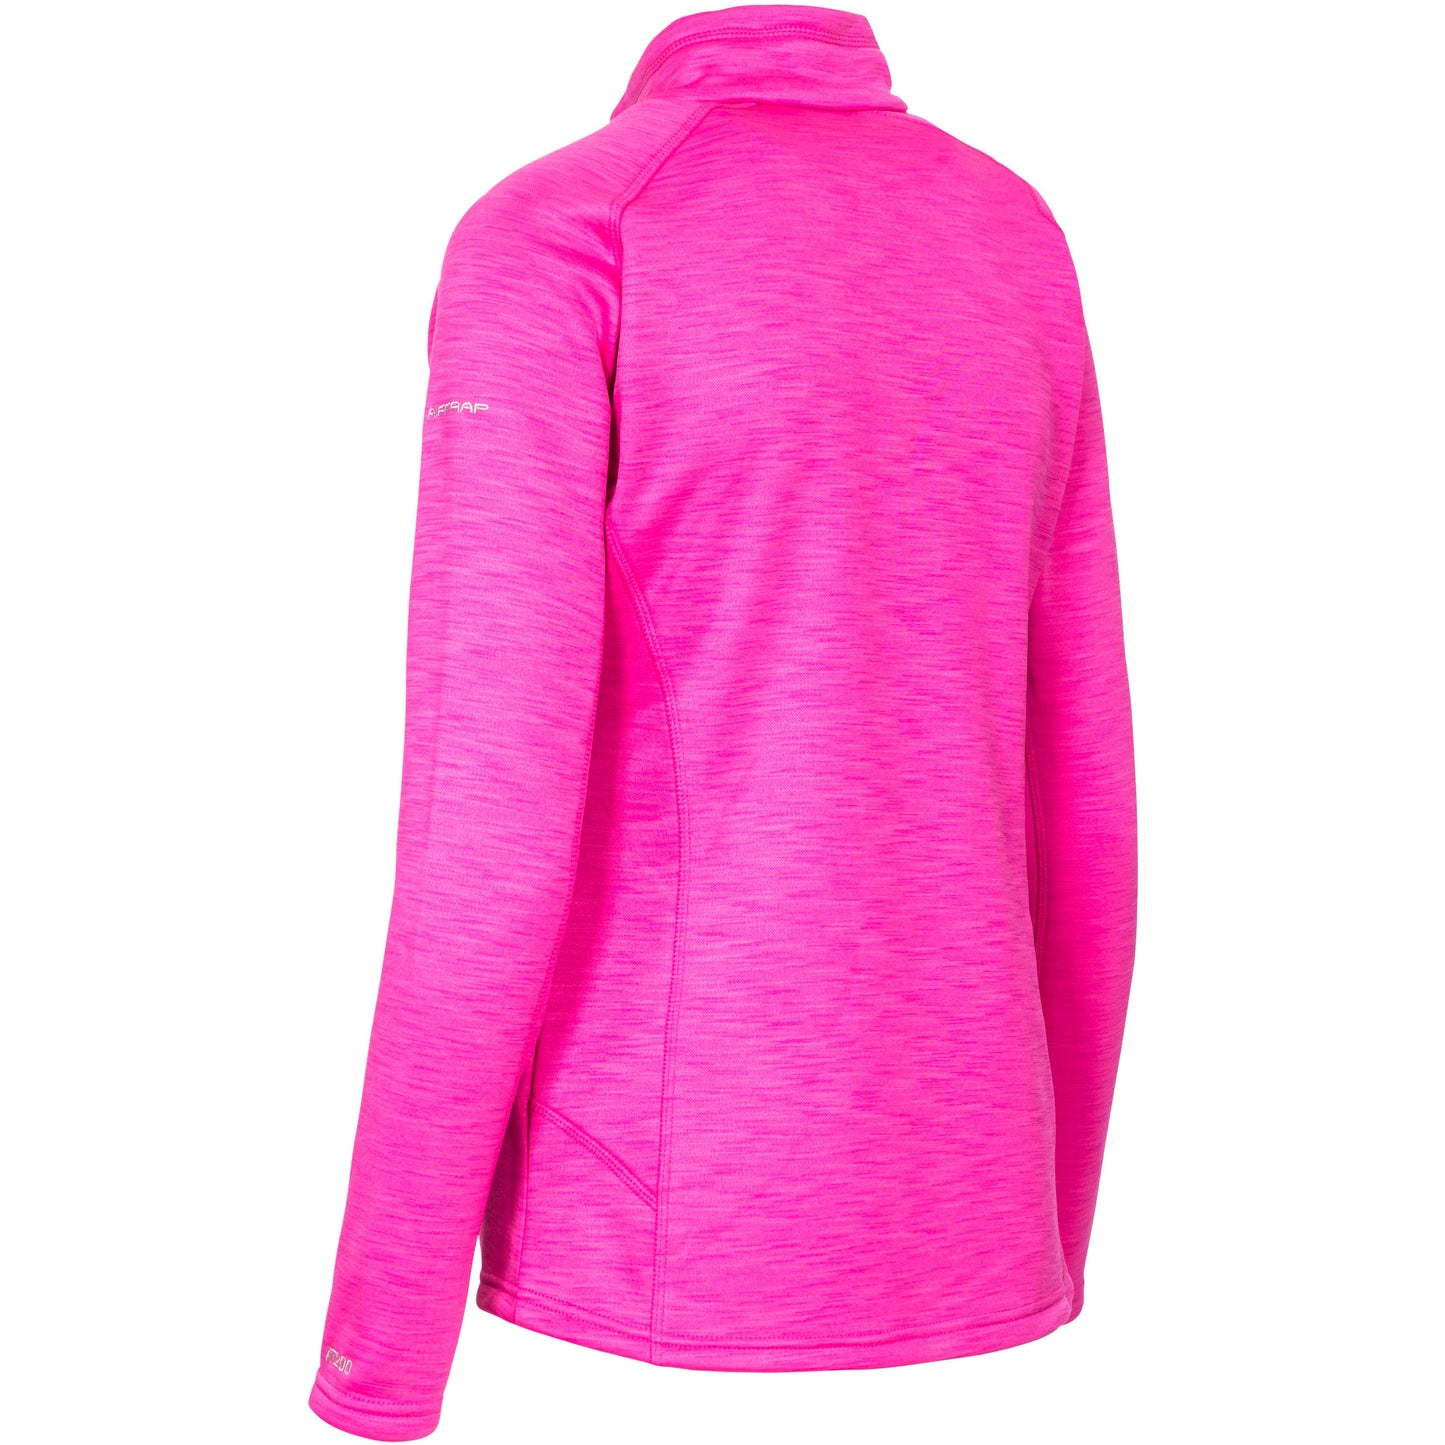 Fairford Women's 1/2 Zip Fleece Jumper - Pink Glow Marl